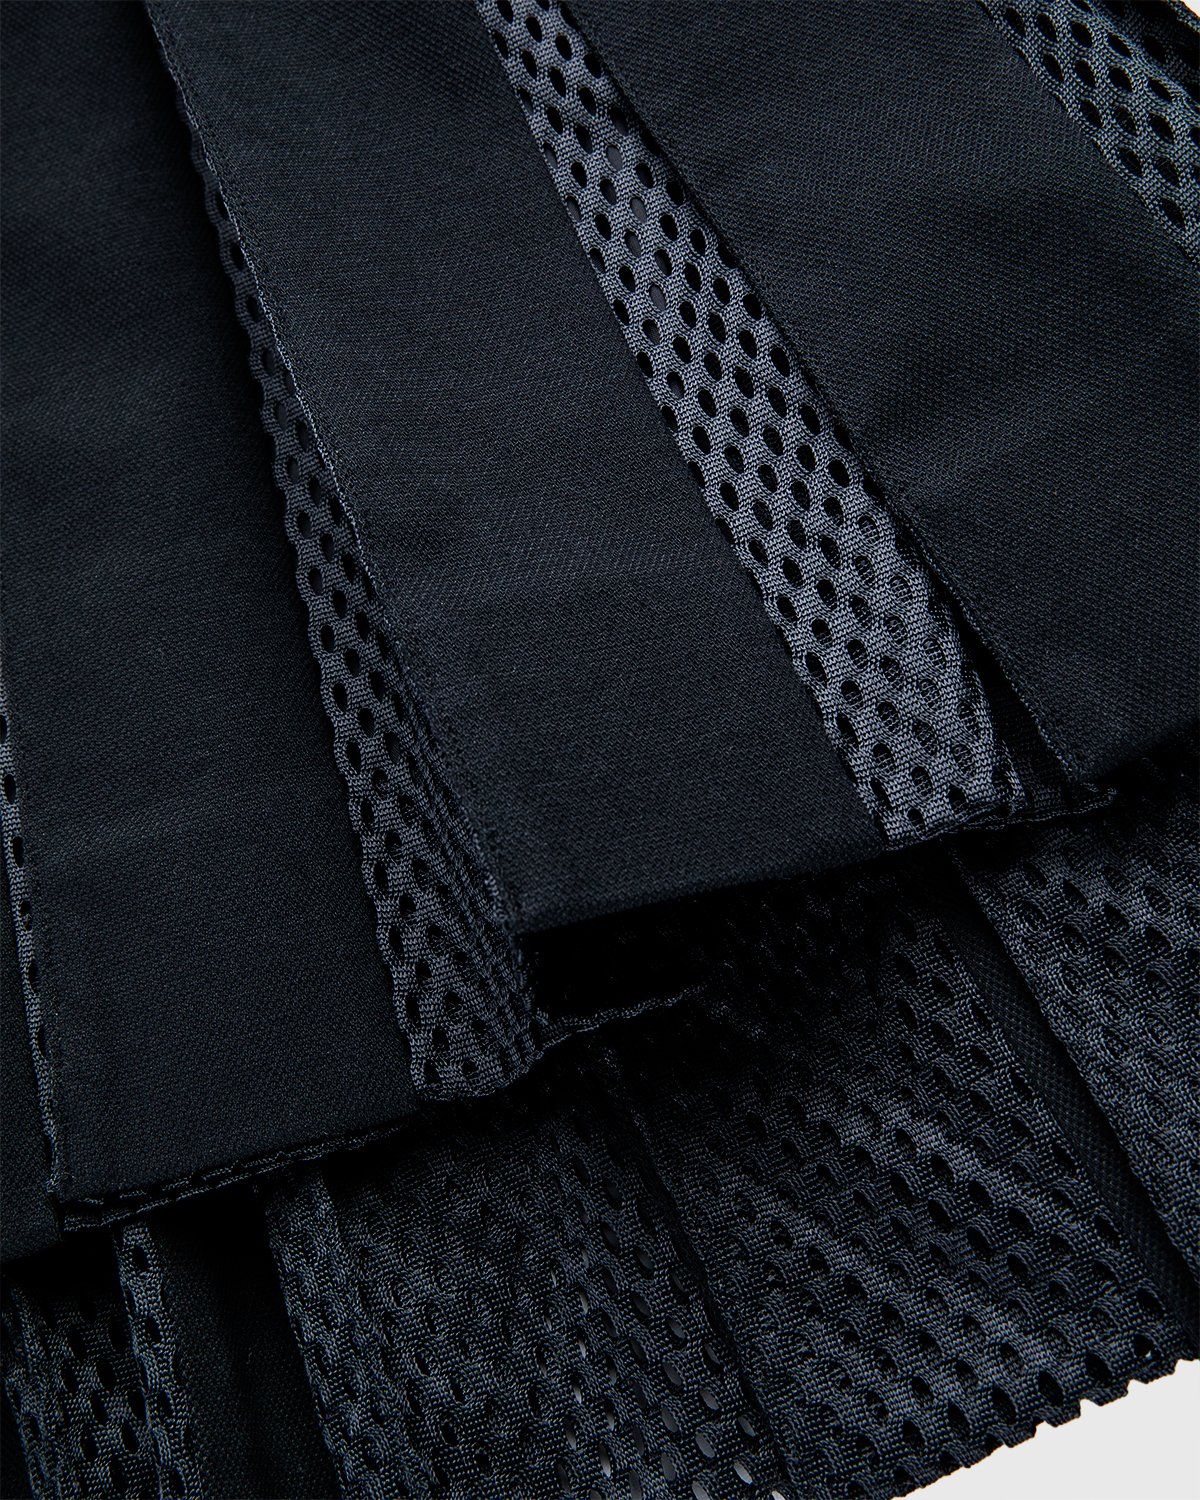 Thom Browne x Highsnobiety – Men's Pleated Mesh Skirt Black - Image 7